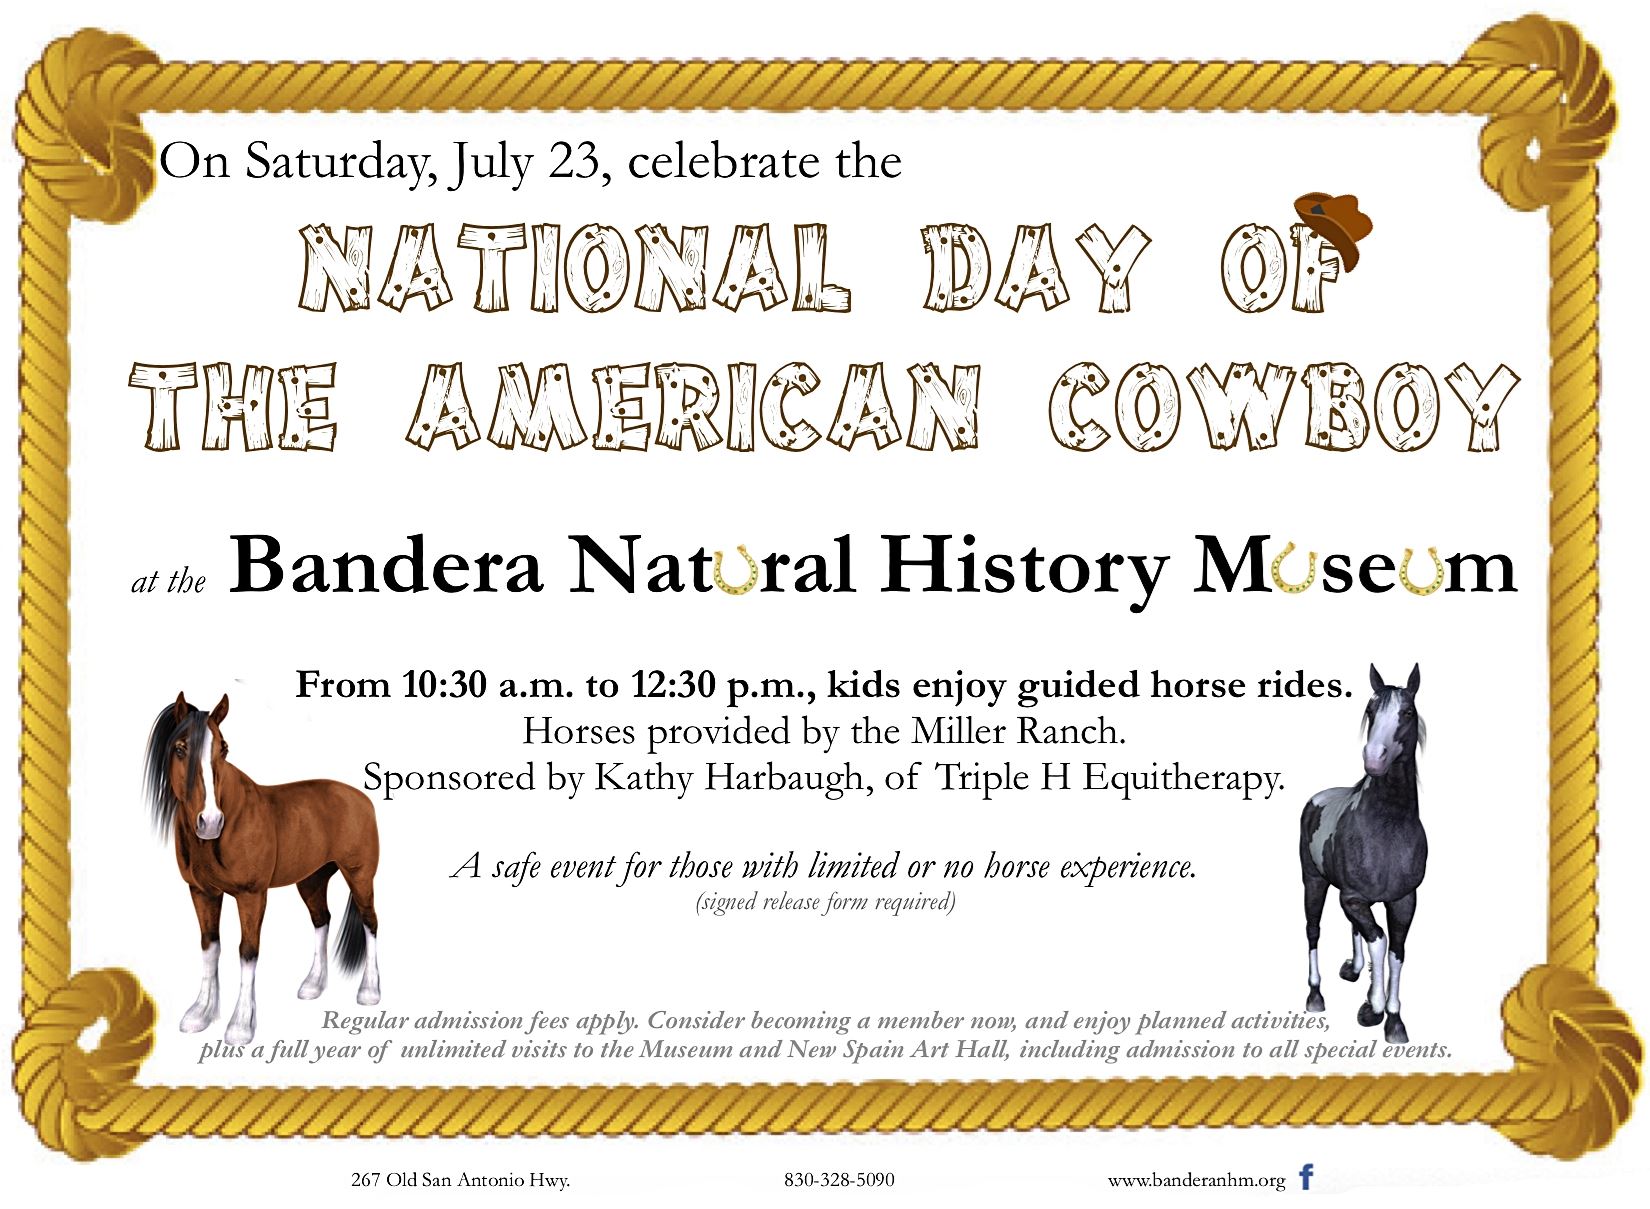 National Day of the American Cowboy at the Bandera Natural History Museum